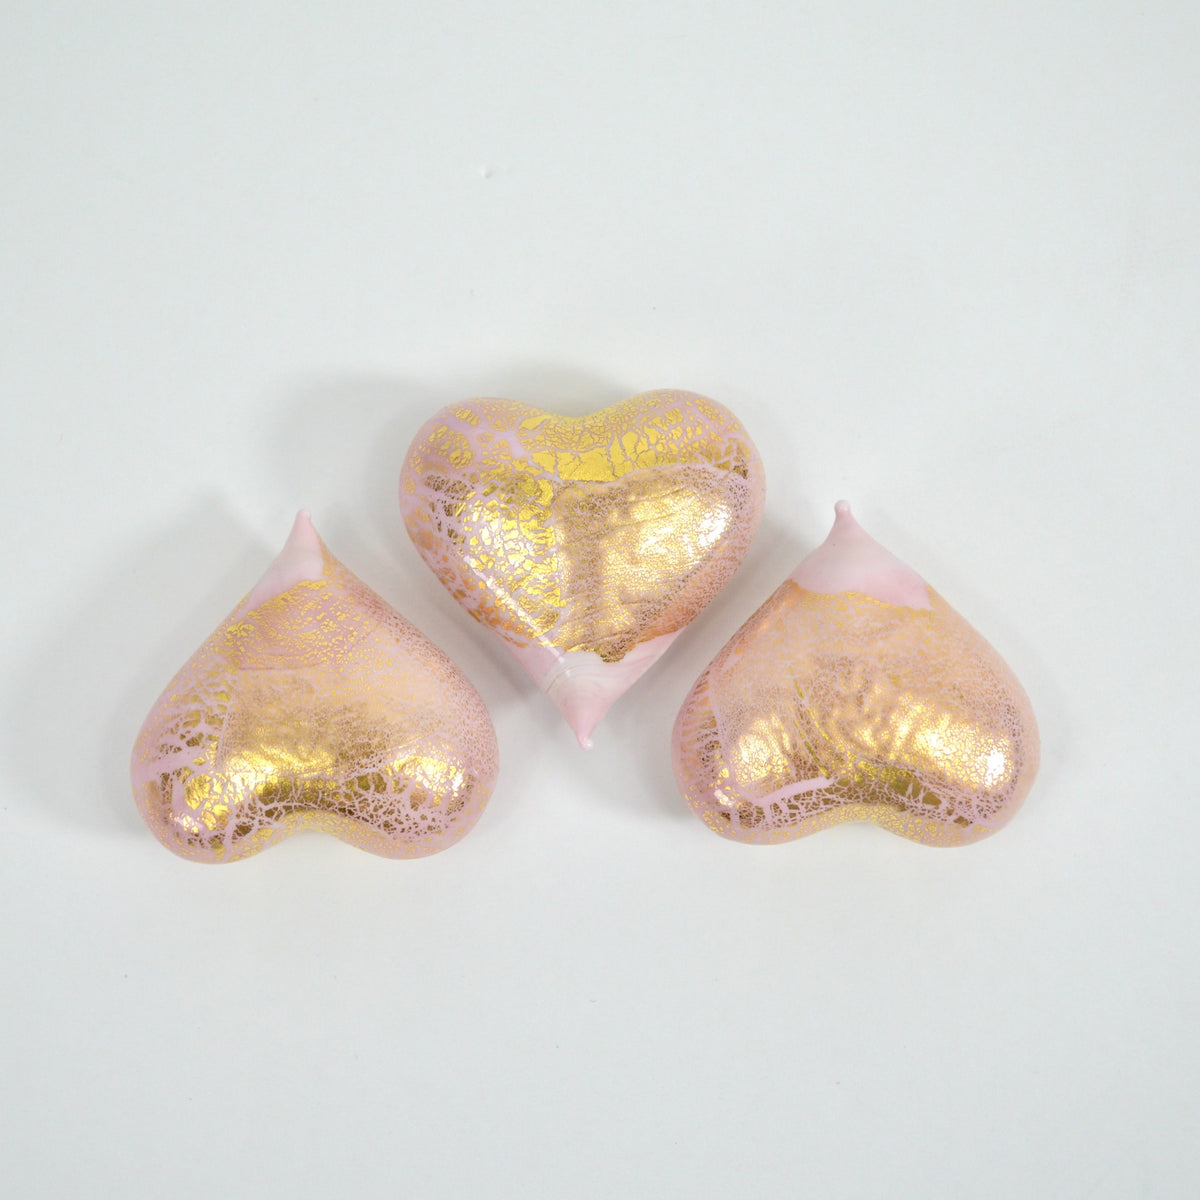 Murano Glass Hearts, Small, Choice of colors, Set of 3, Made in Italy - My Italian Decor